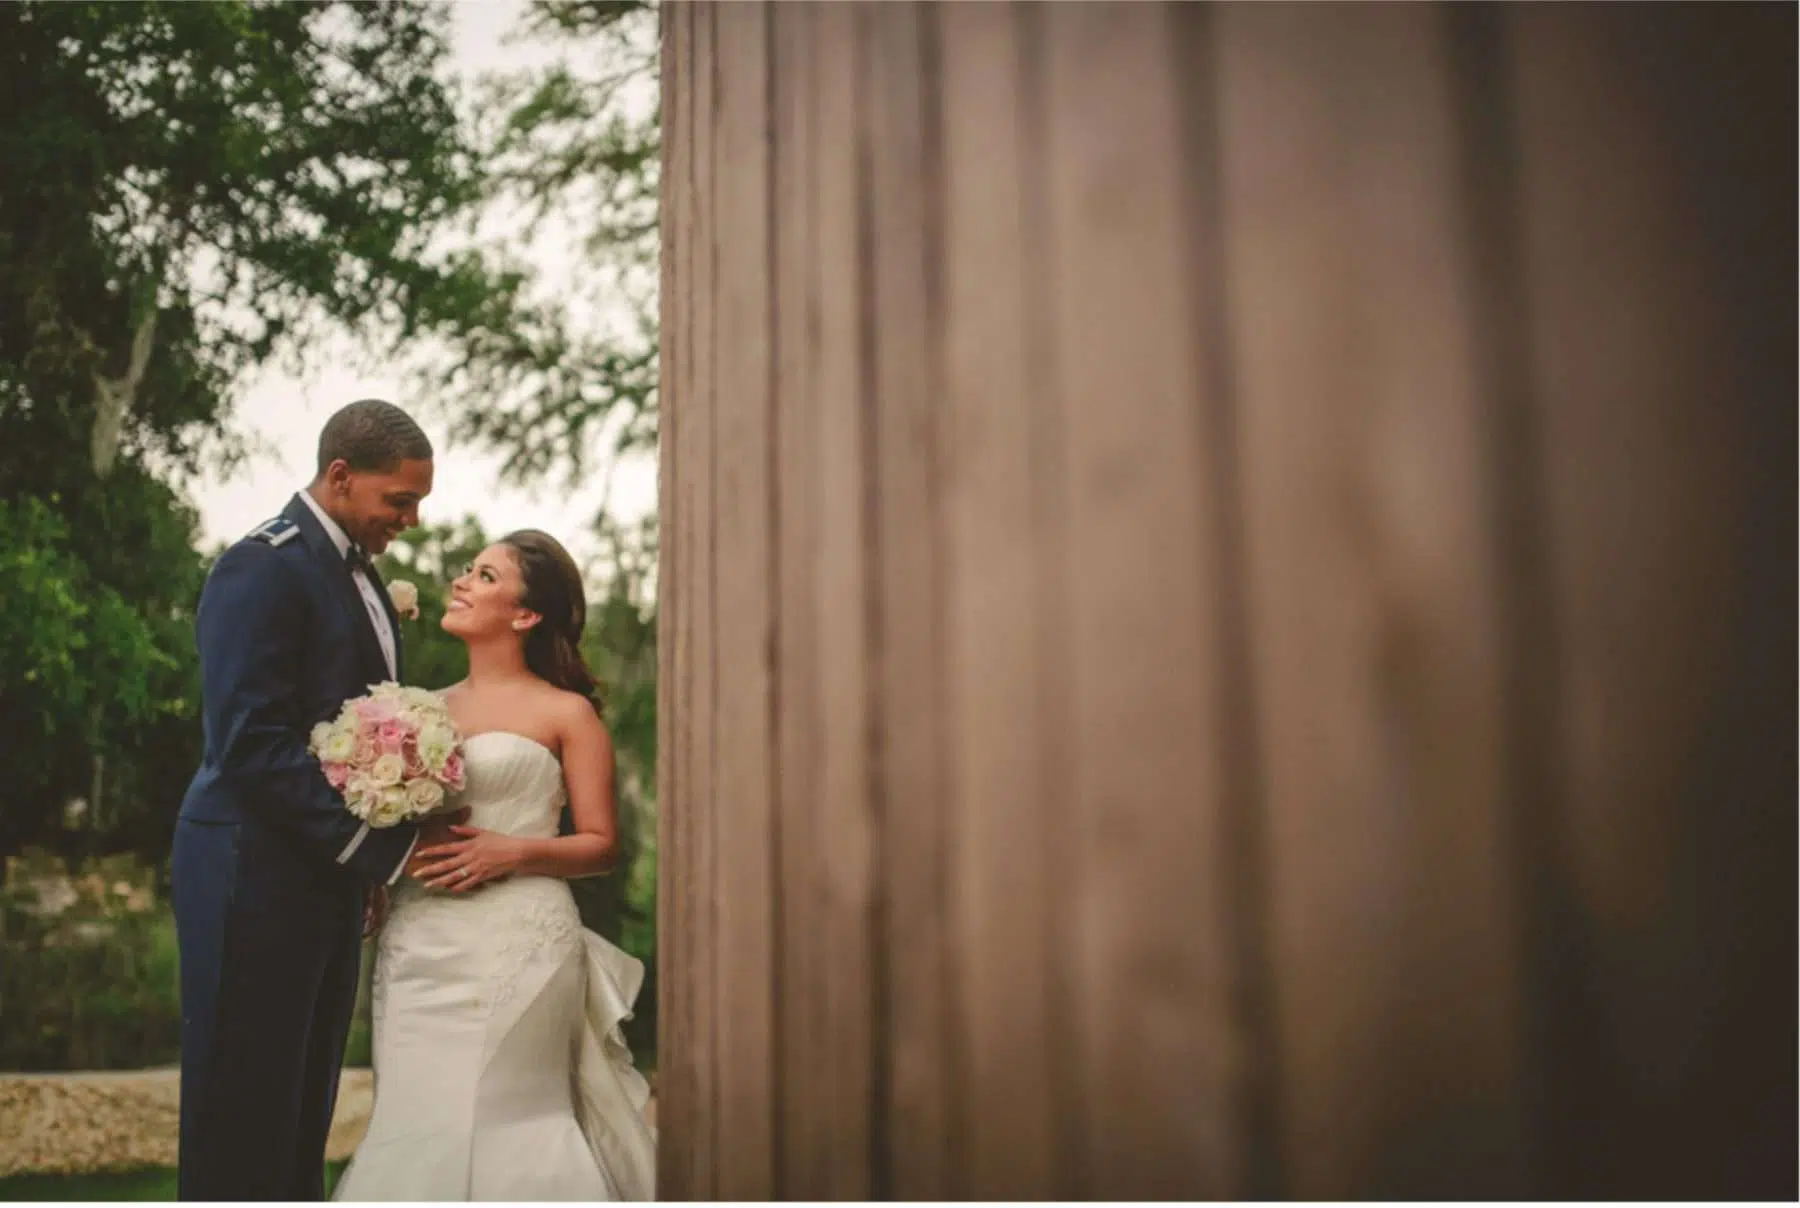 Jocelyn and Reggie Wedding at San Antonio Texas The Lodge at Bridal Veil Falls